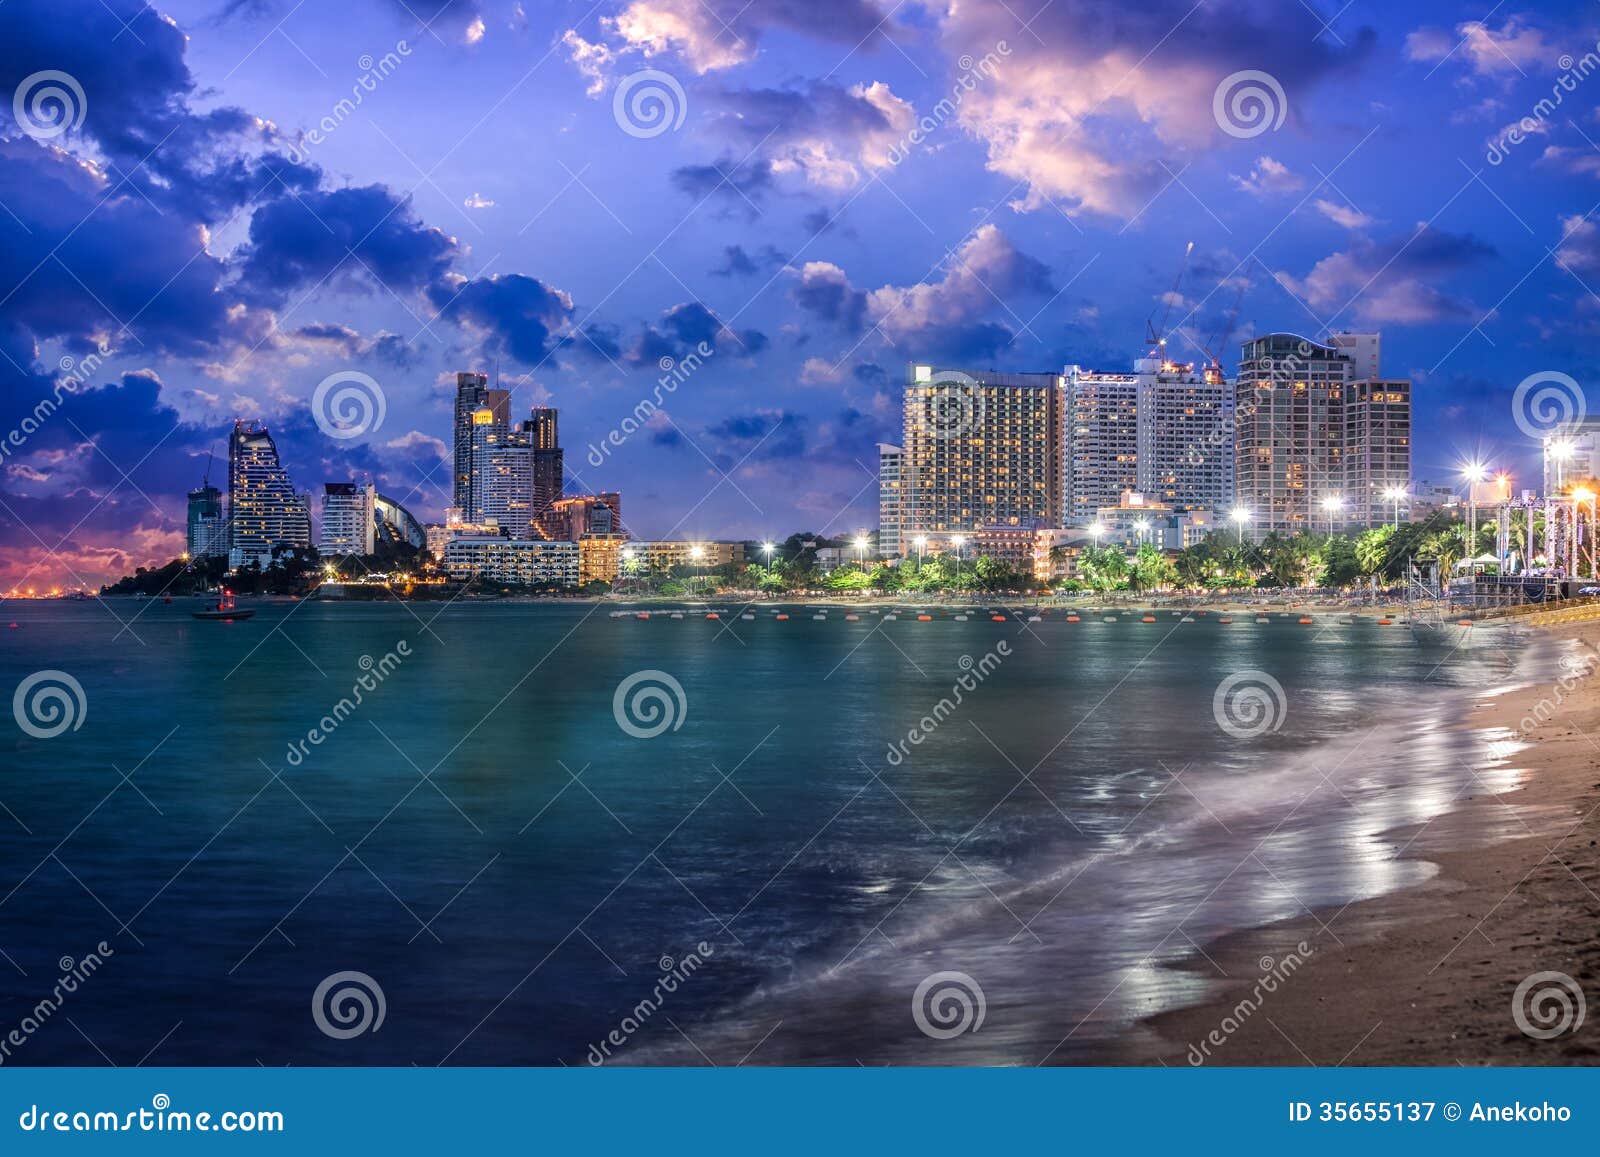 pattaya city and sea in twilight, thailand